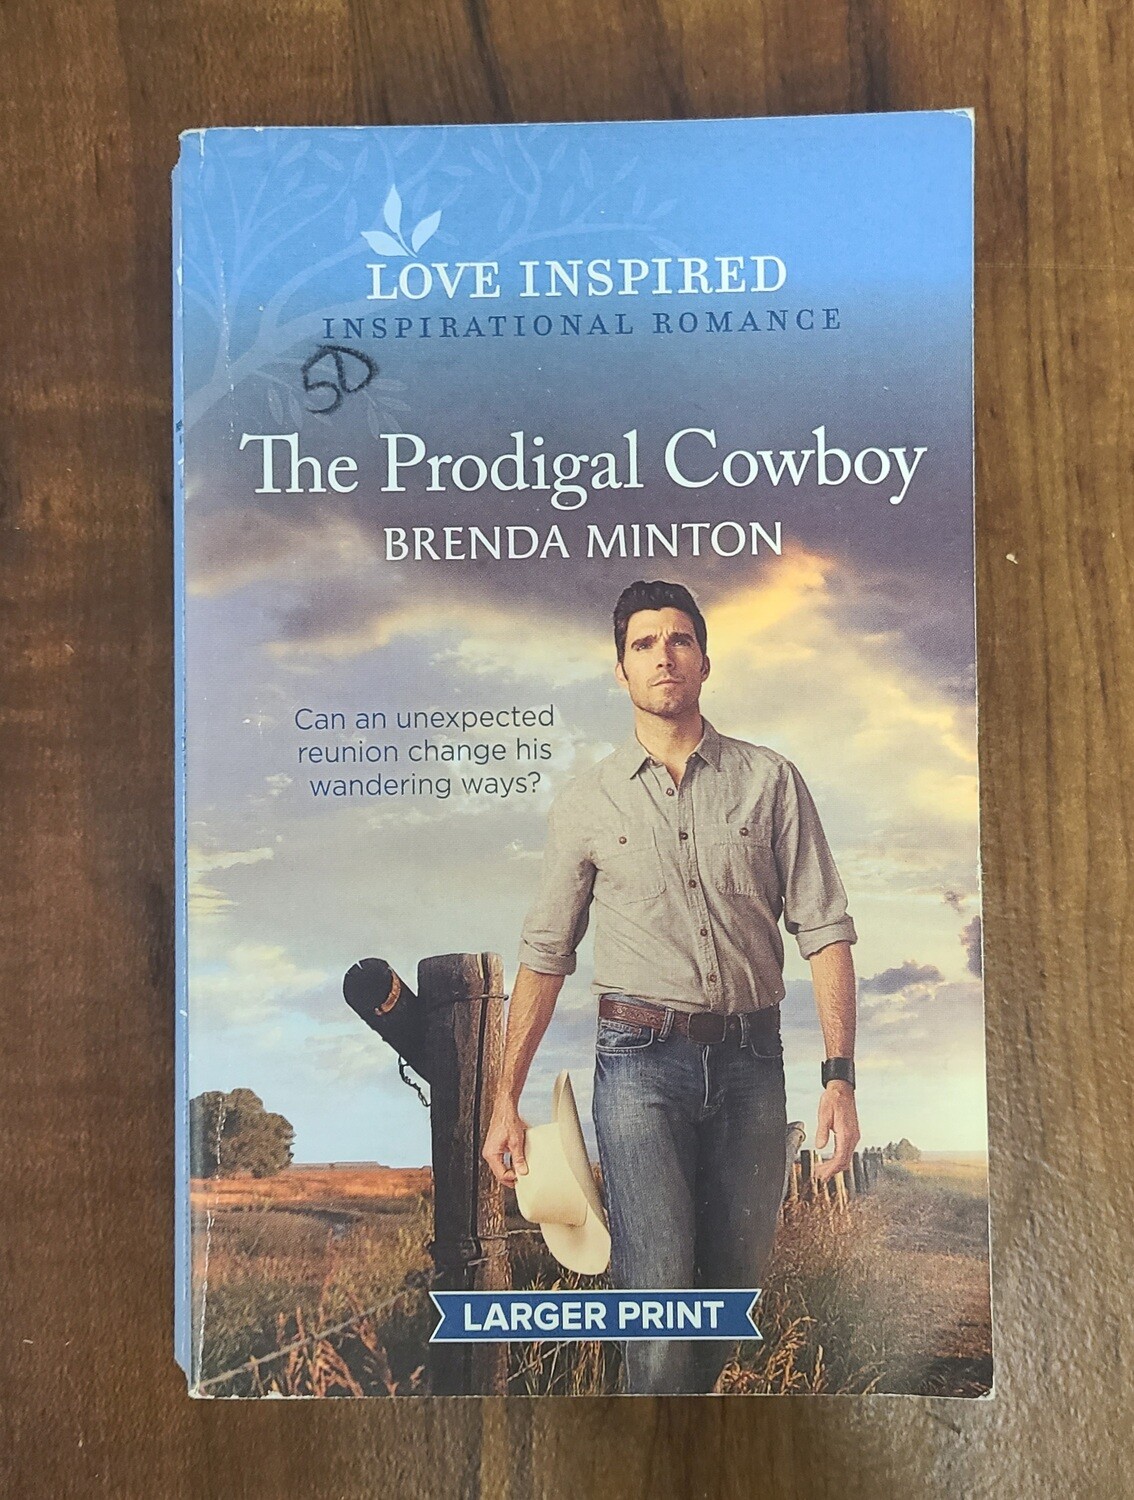 The Prodigal Cowboy by Brenda Minton